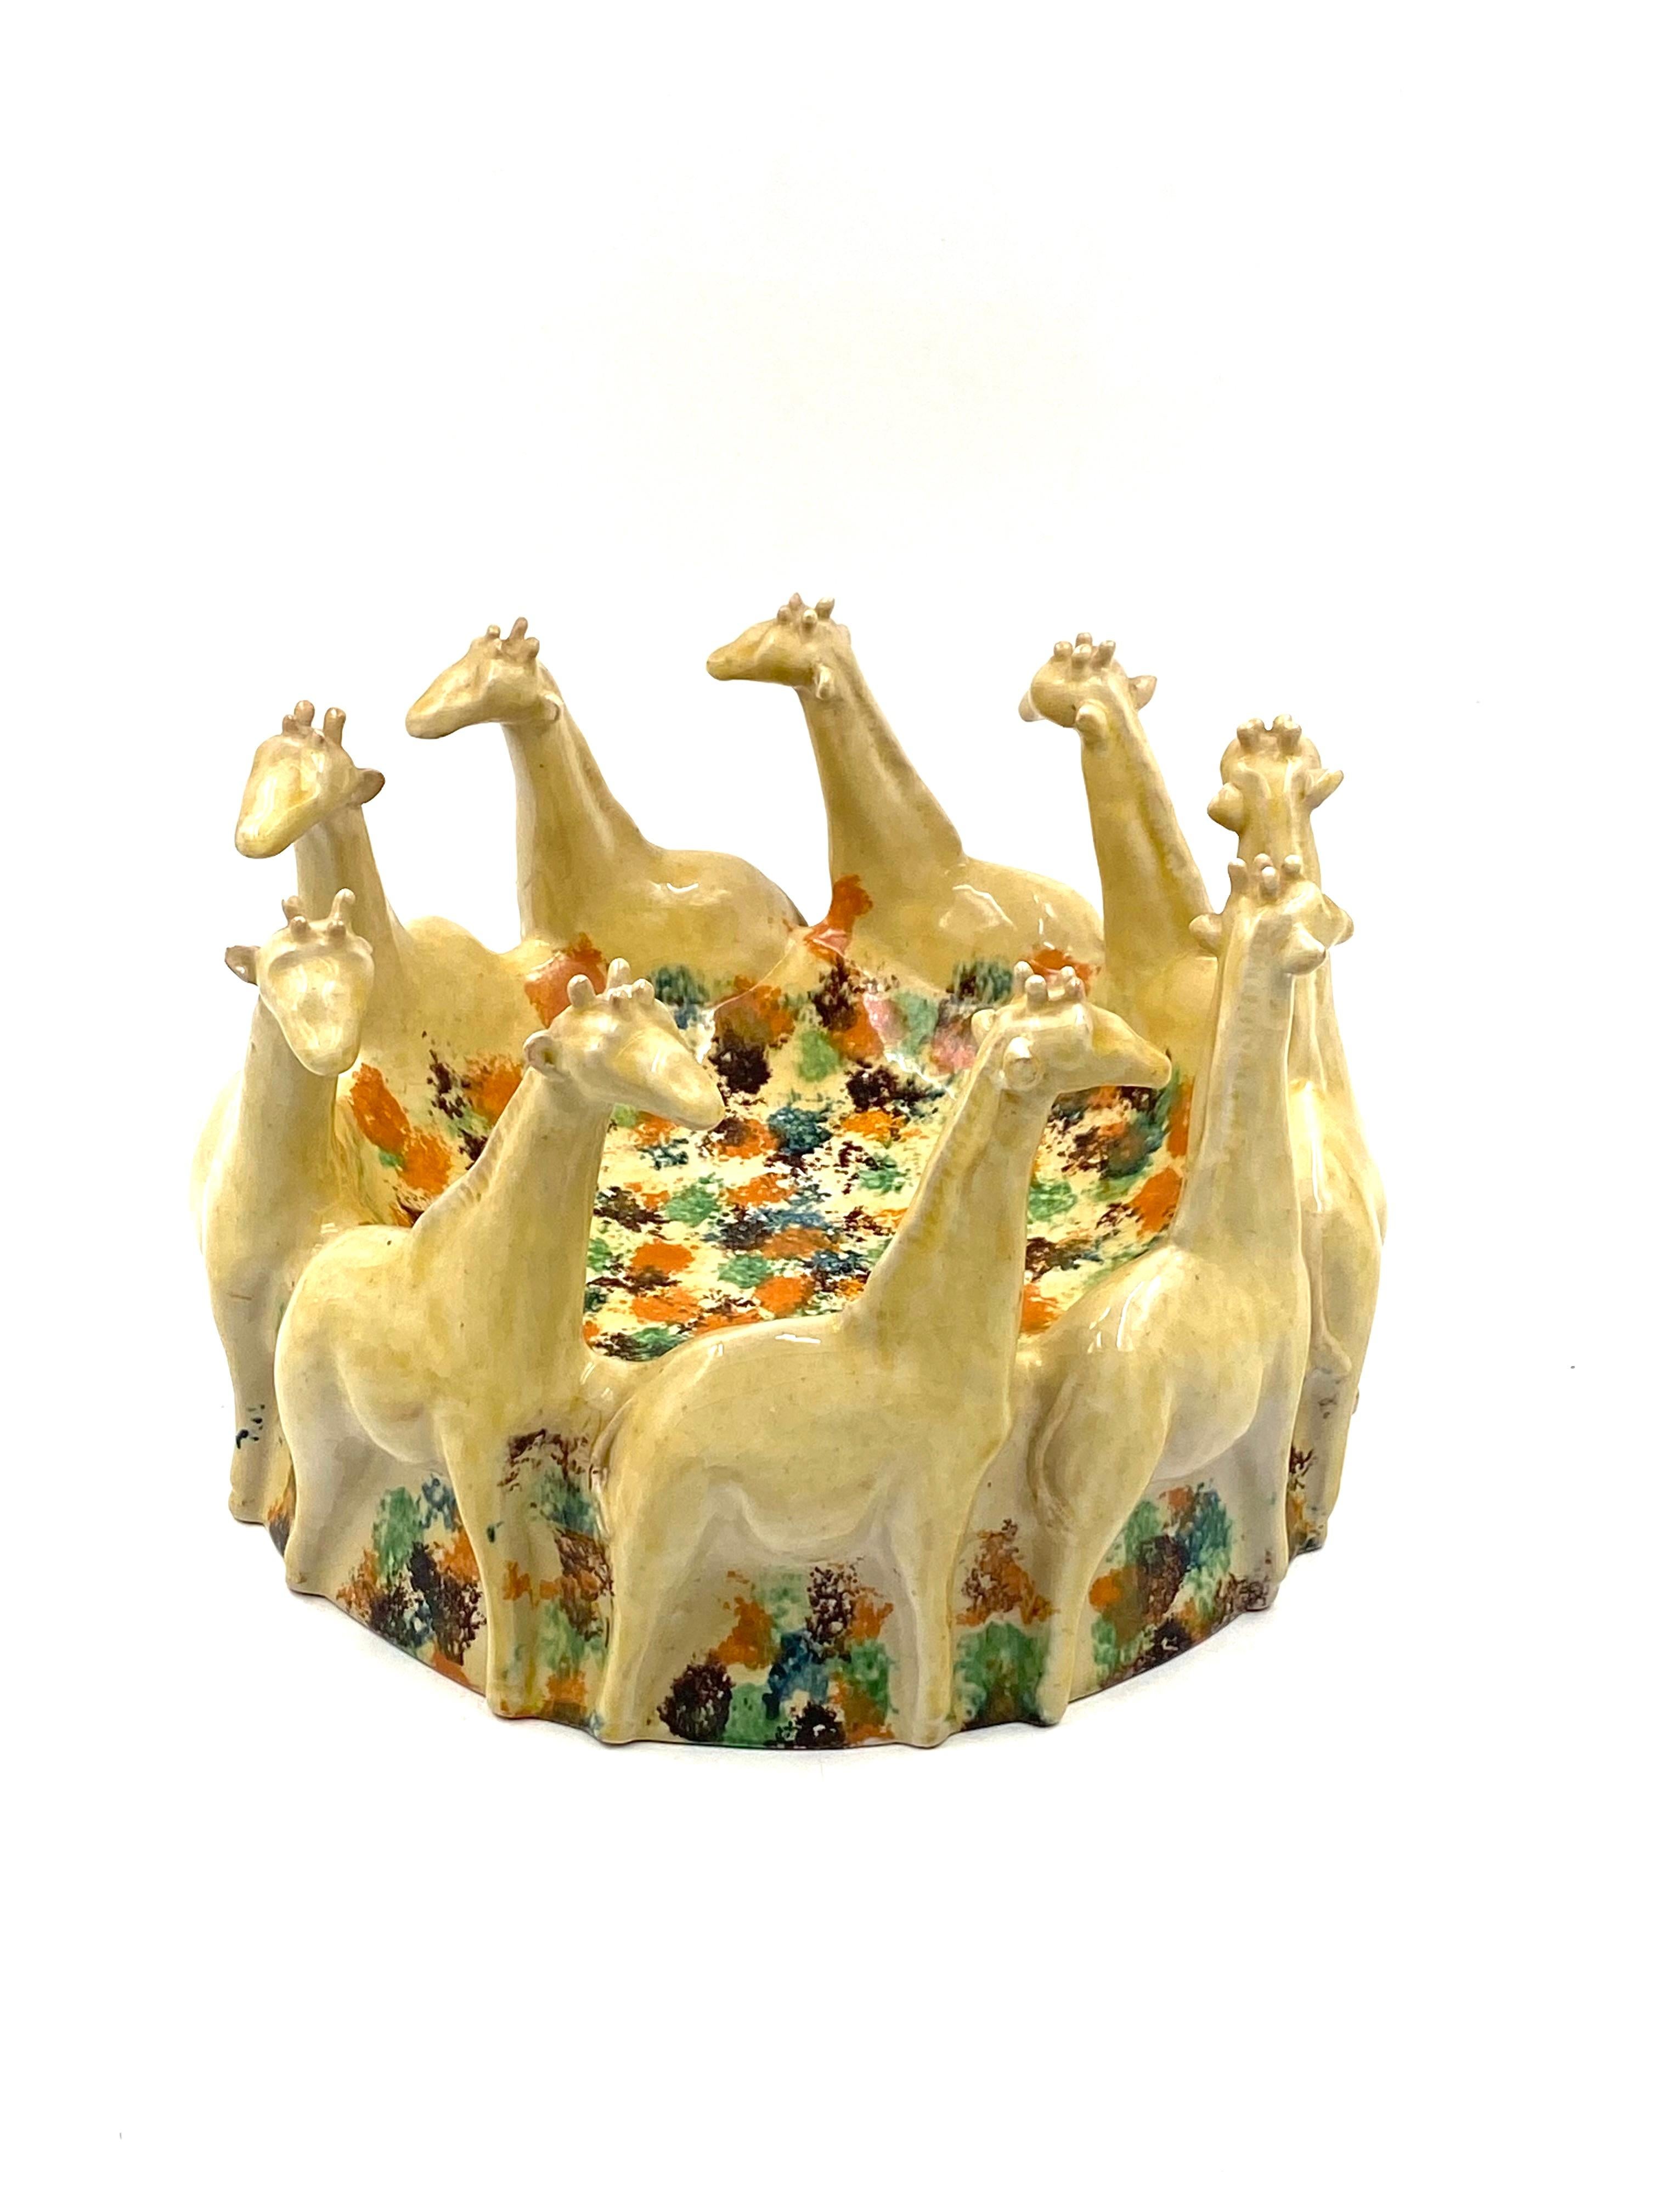 Postmodern giraffe ceramic centerpiece / vide poche, ND Dolfi Italy, 1990s For Sale 9